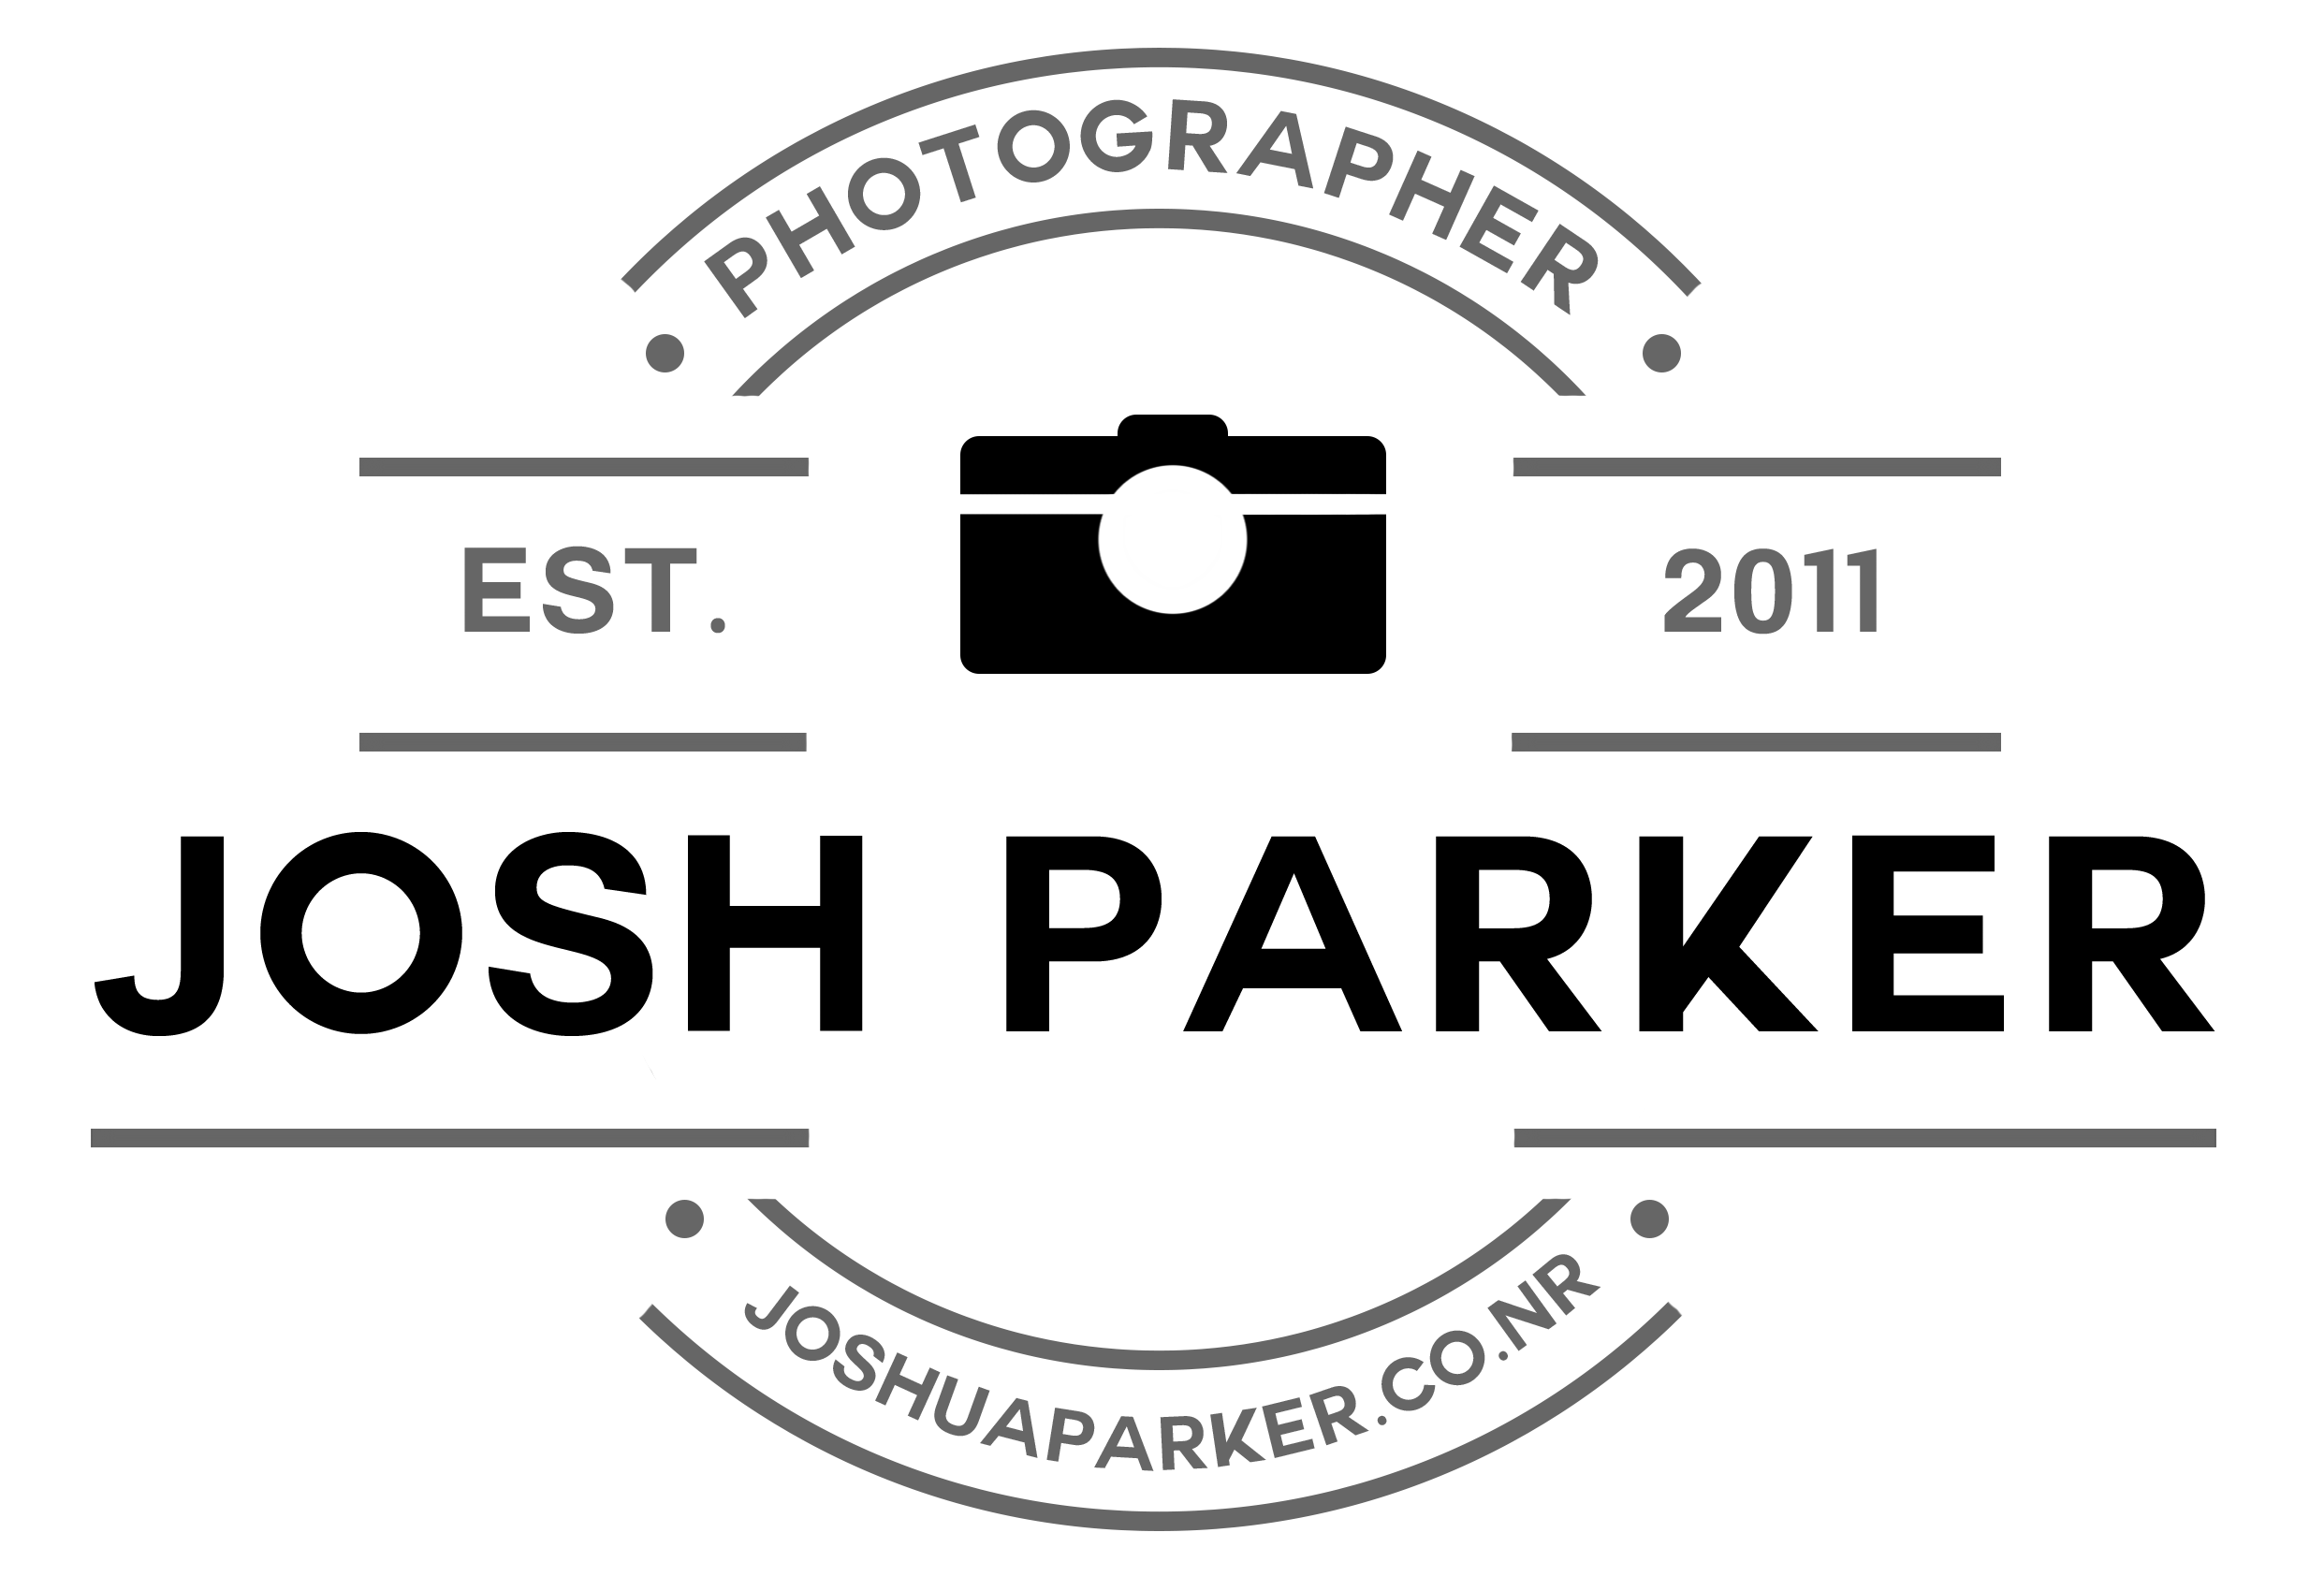 Josh Parker